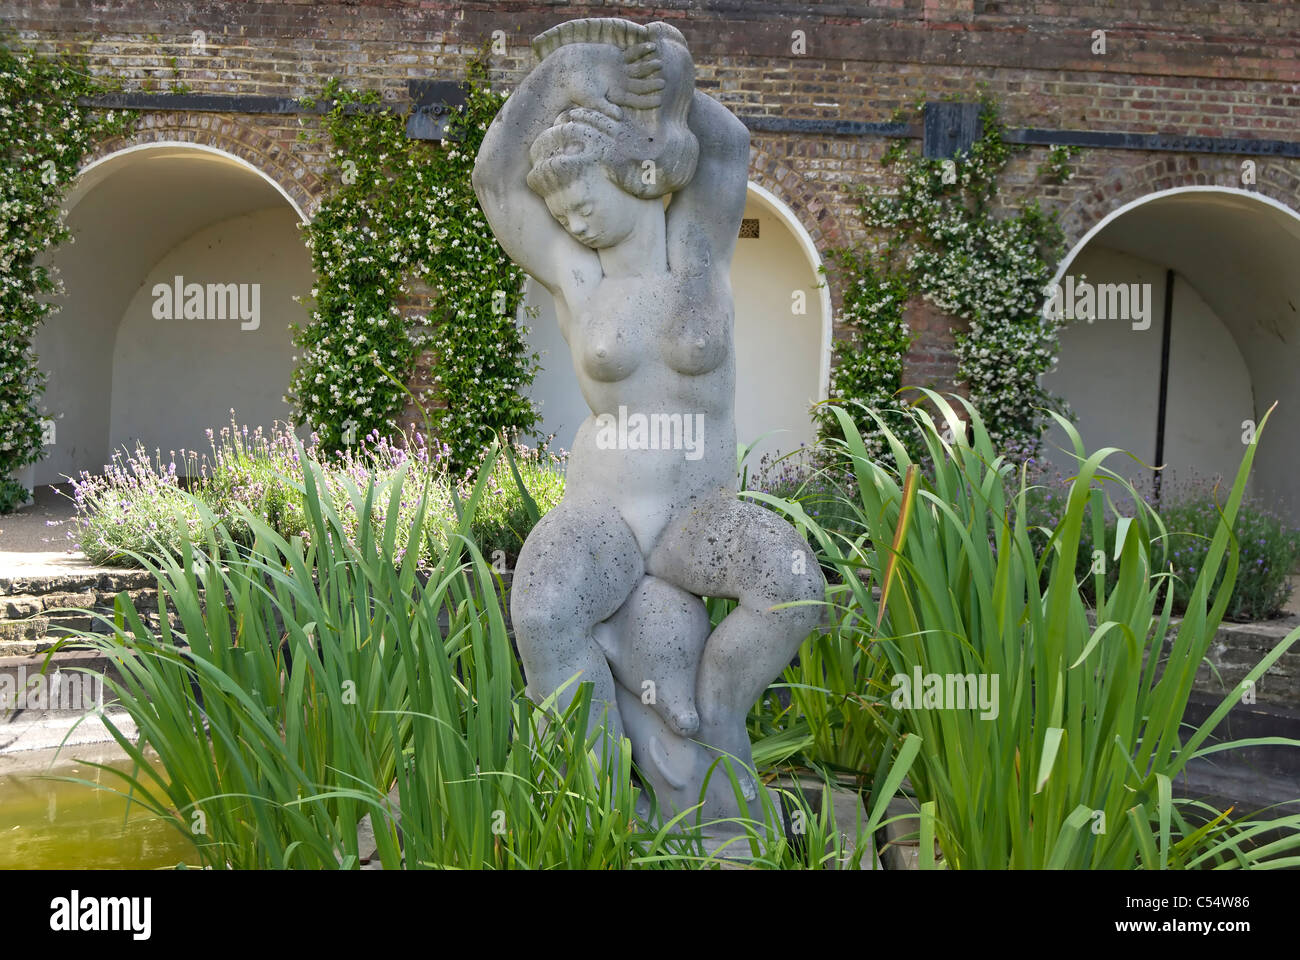 allan howe's 1952 sculpture, aphrodite, locally nicknamed bulbous betty, in terrace gardens, richmond, surrey, england Stock Photo